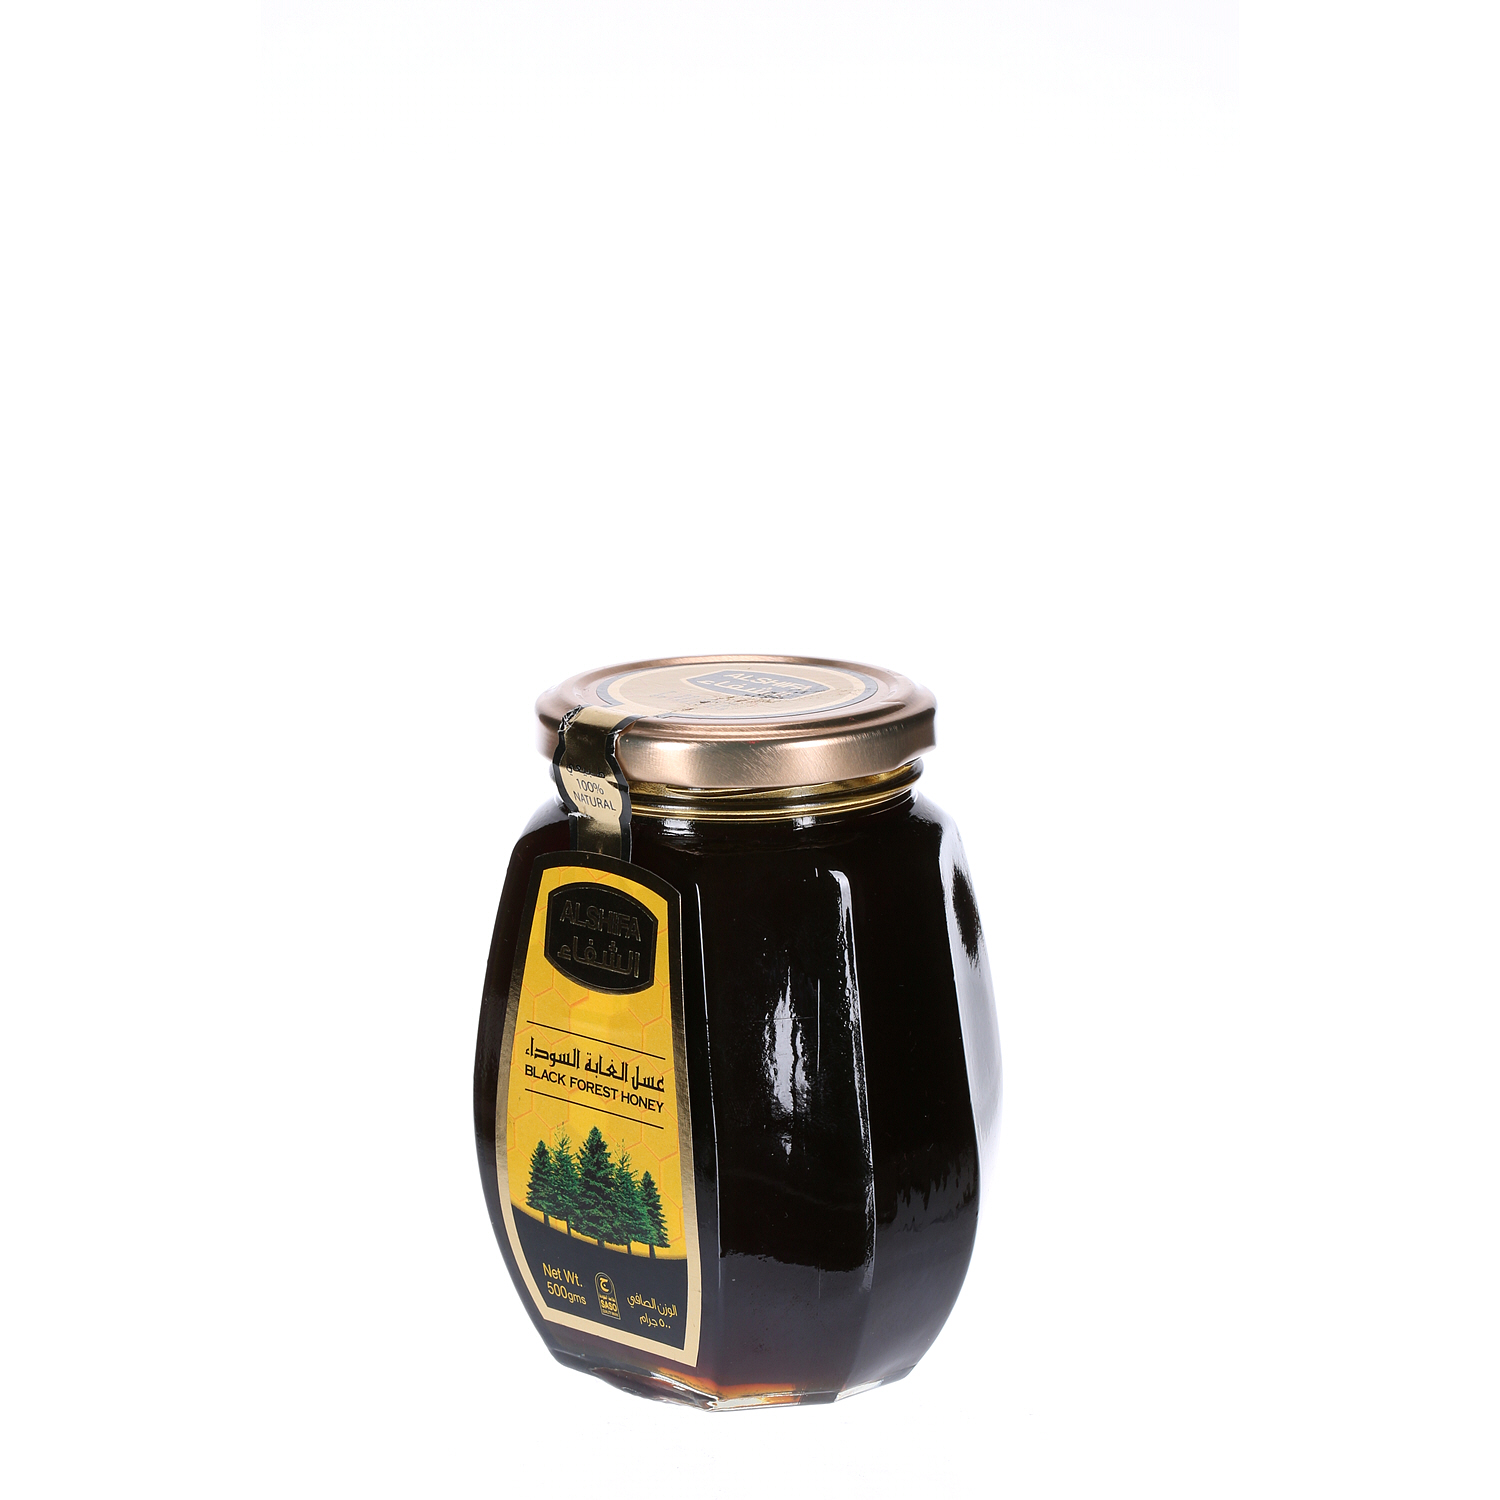 Al Shifa Black Forest Honey 500 g